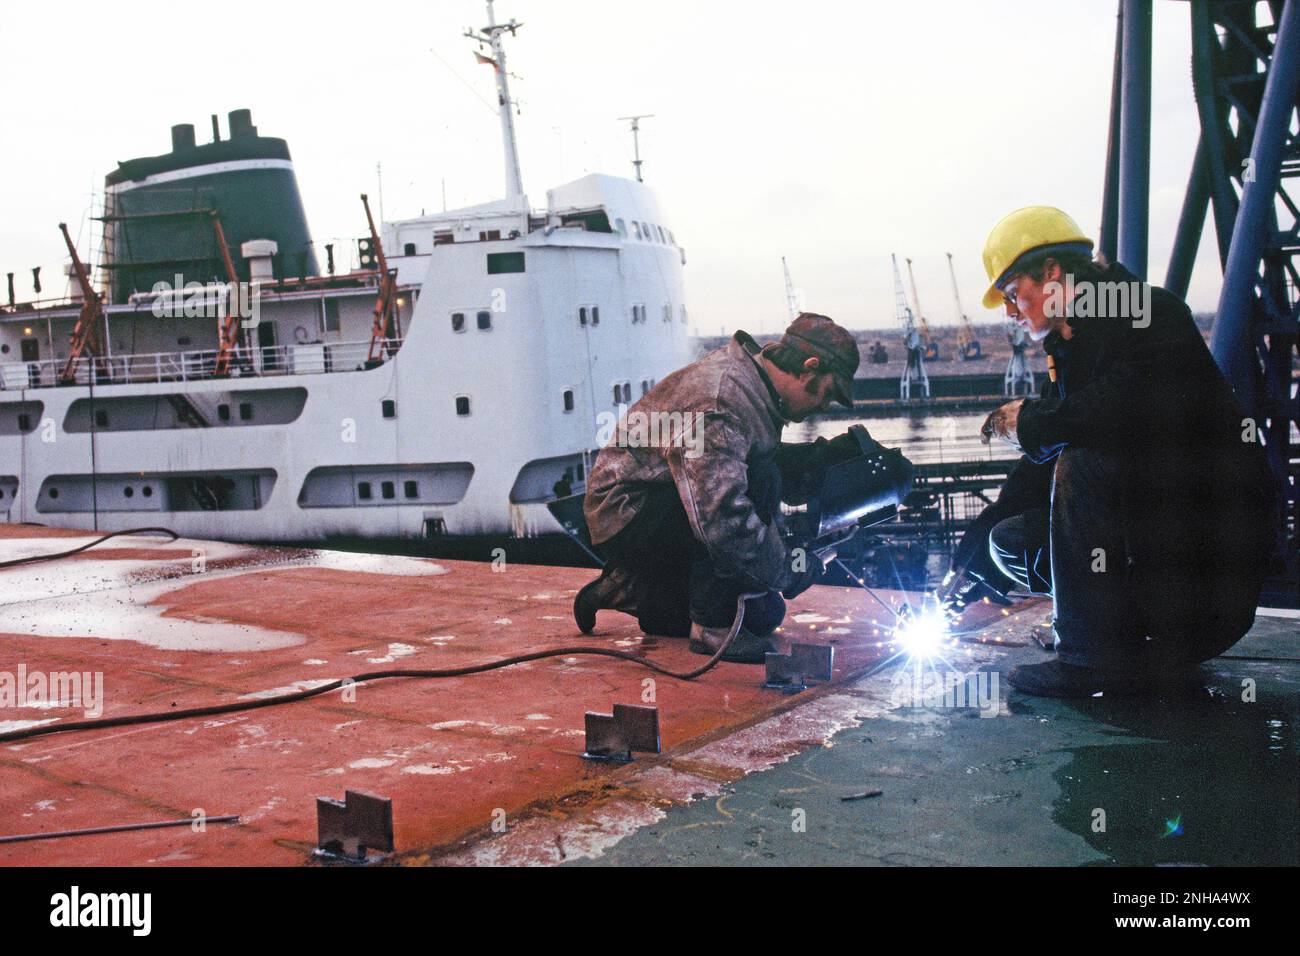 United Kingdom. England. Industry. Ship building. Men welding on ship deck. Stock Photo